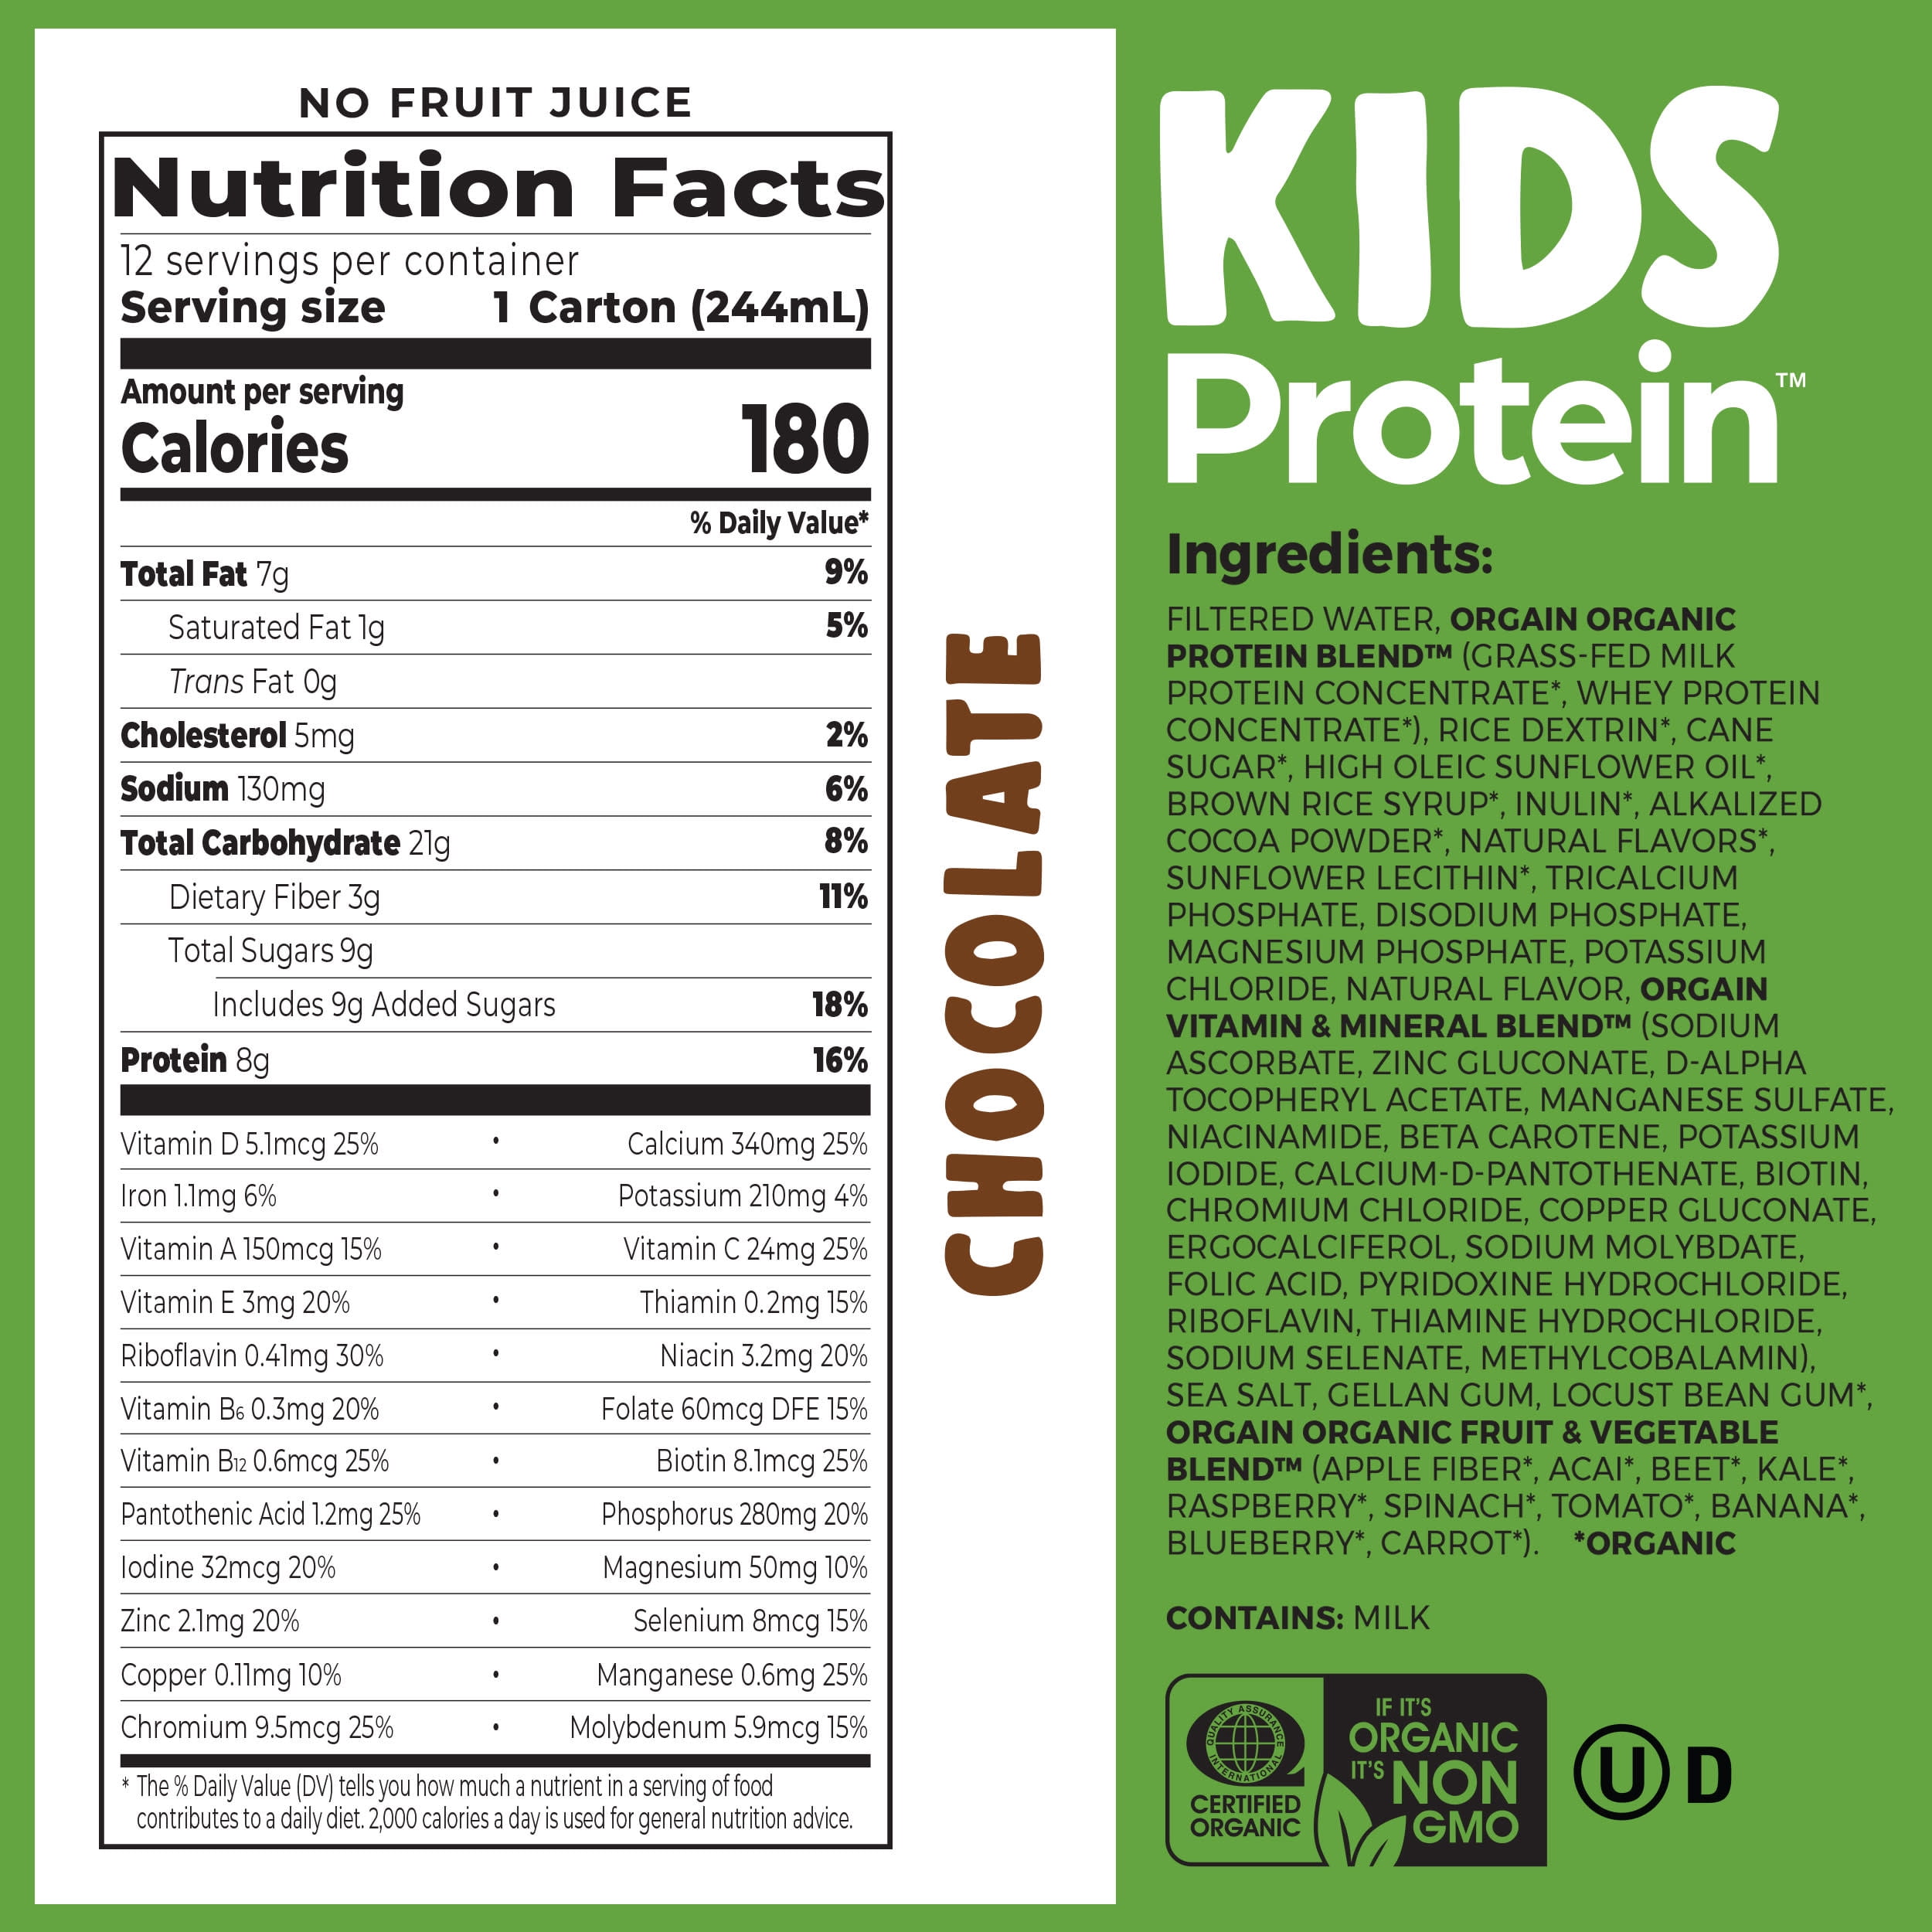 Orgain Kids Vanilla Protein Shake - 4pk/8.25 fl oz Cartons